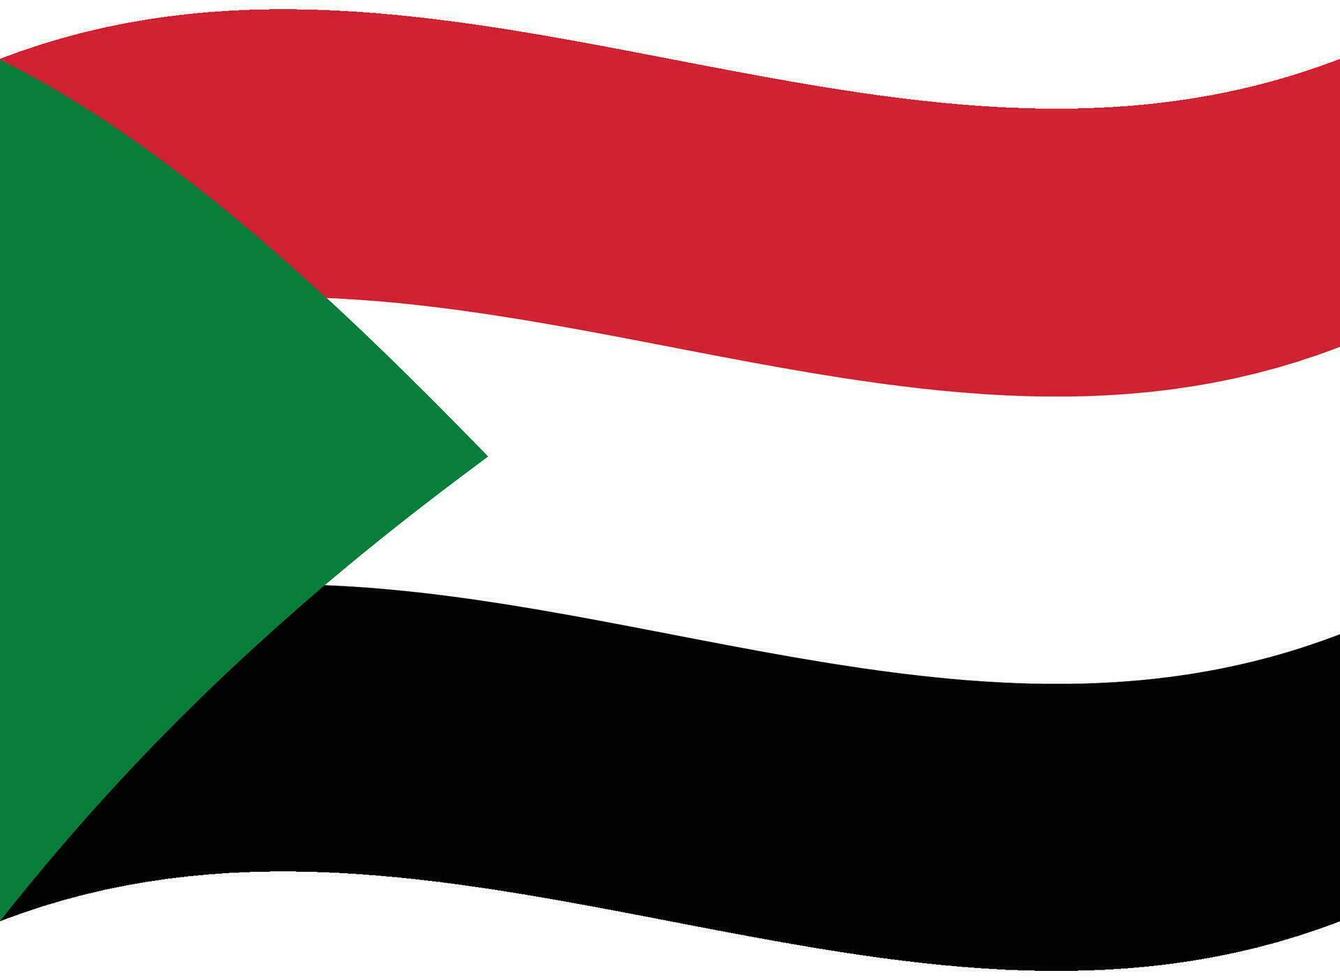 Sudan flag wave. Flag of Sudan. Sudan flag vector